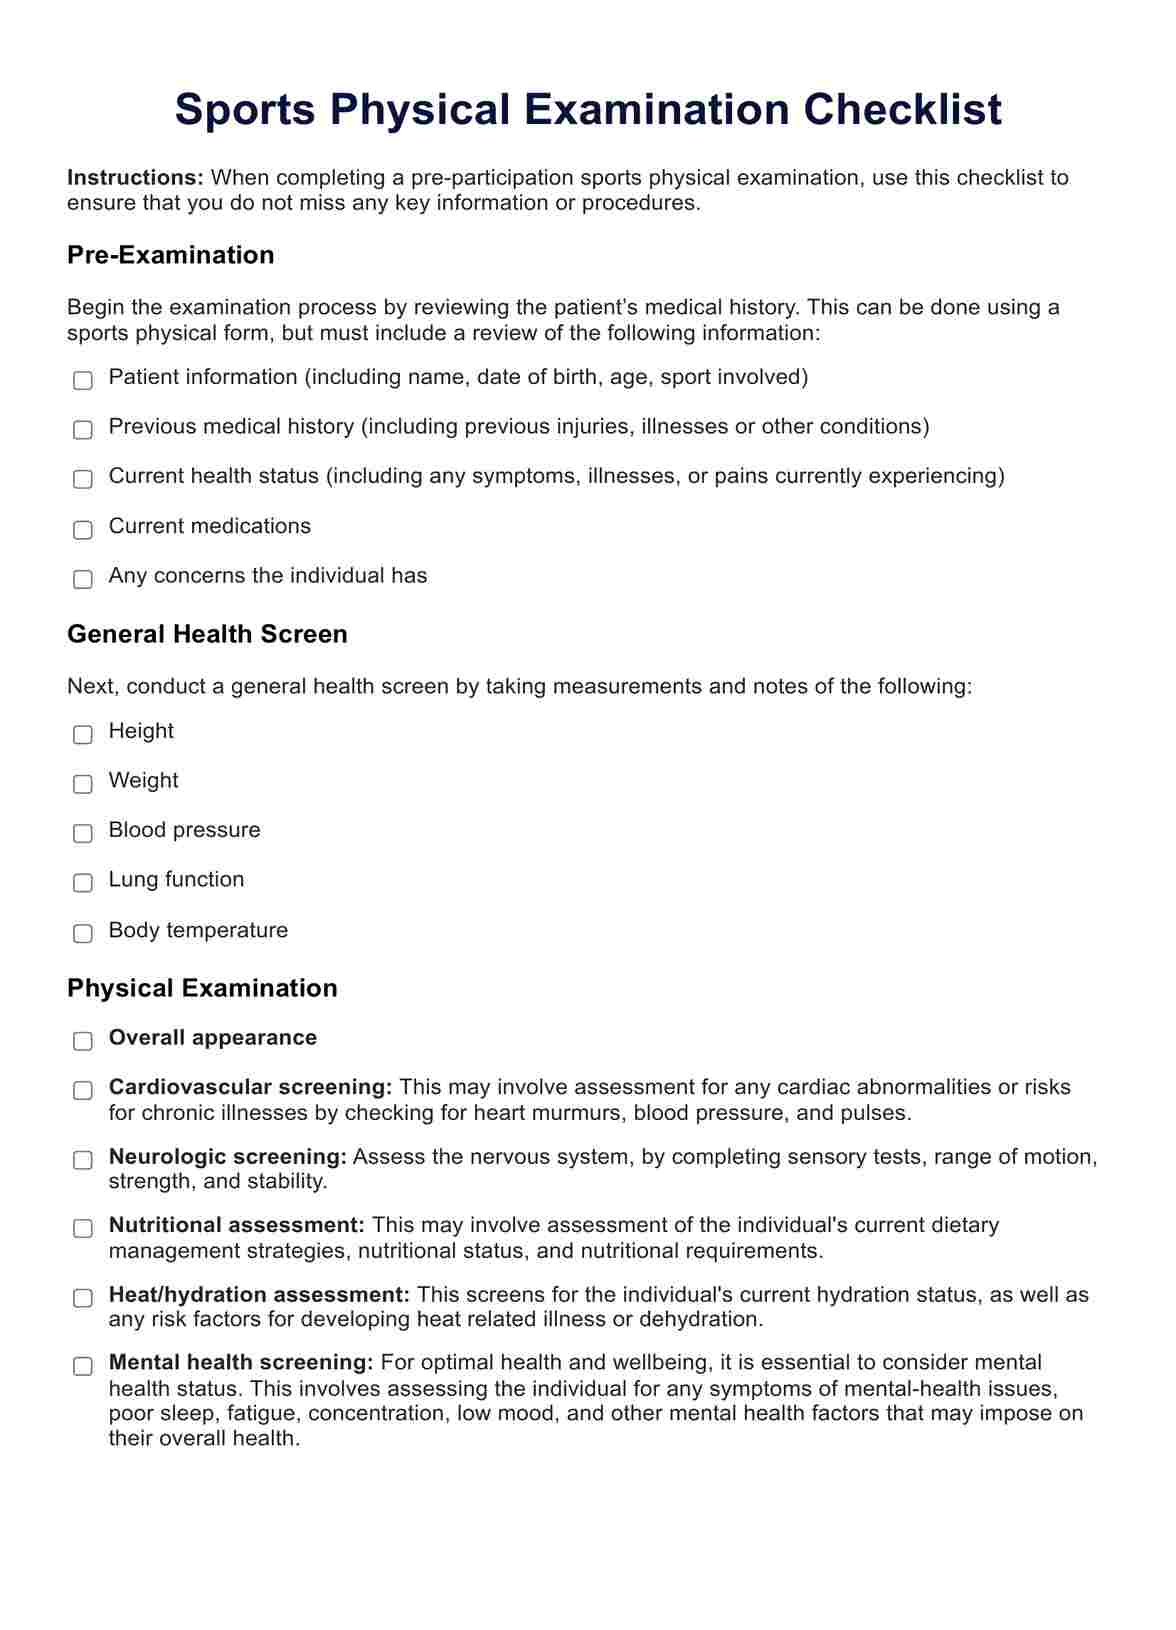 Sports Physical Exam Checklist PDF Example